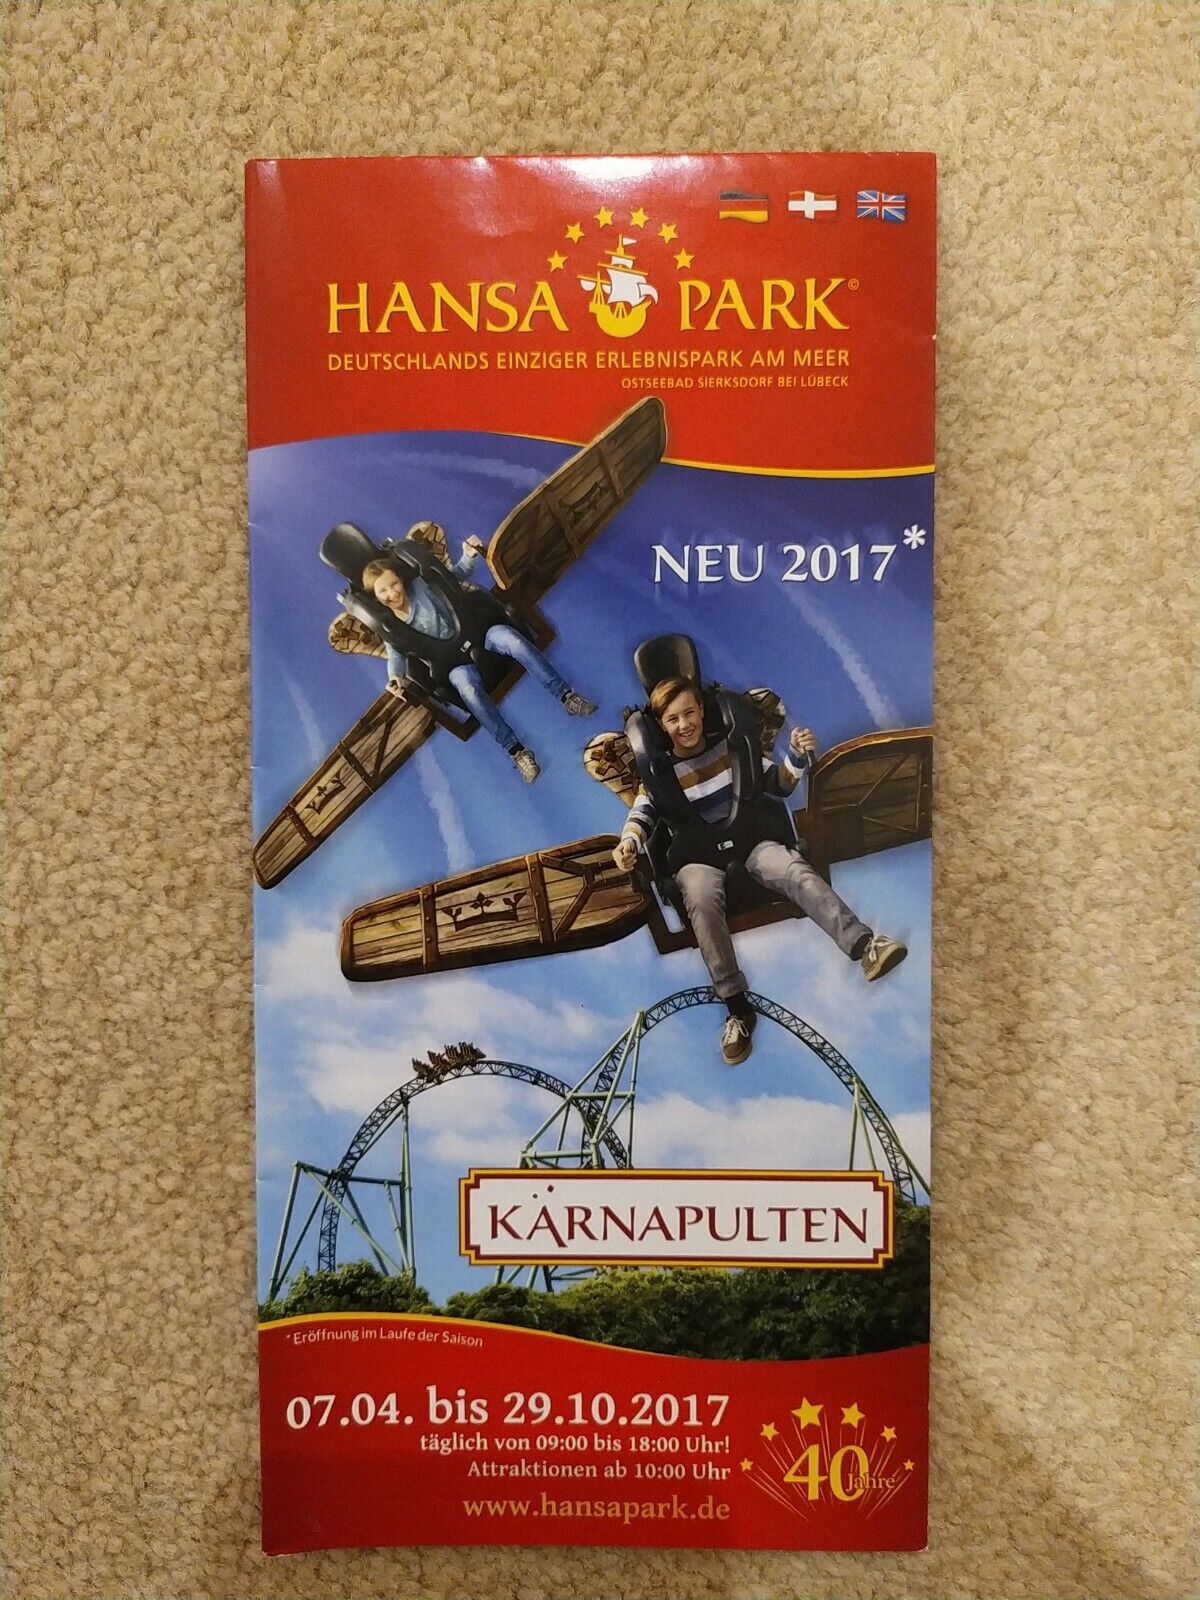 Hansa Park 2017 Theme Park Map - Immaculate Condition